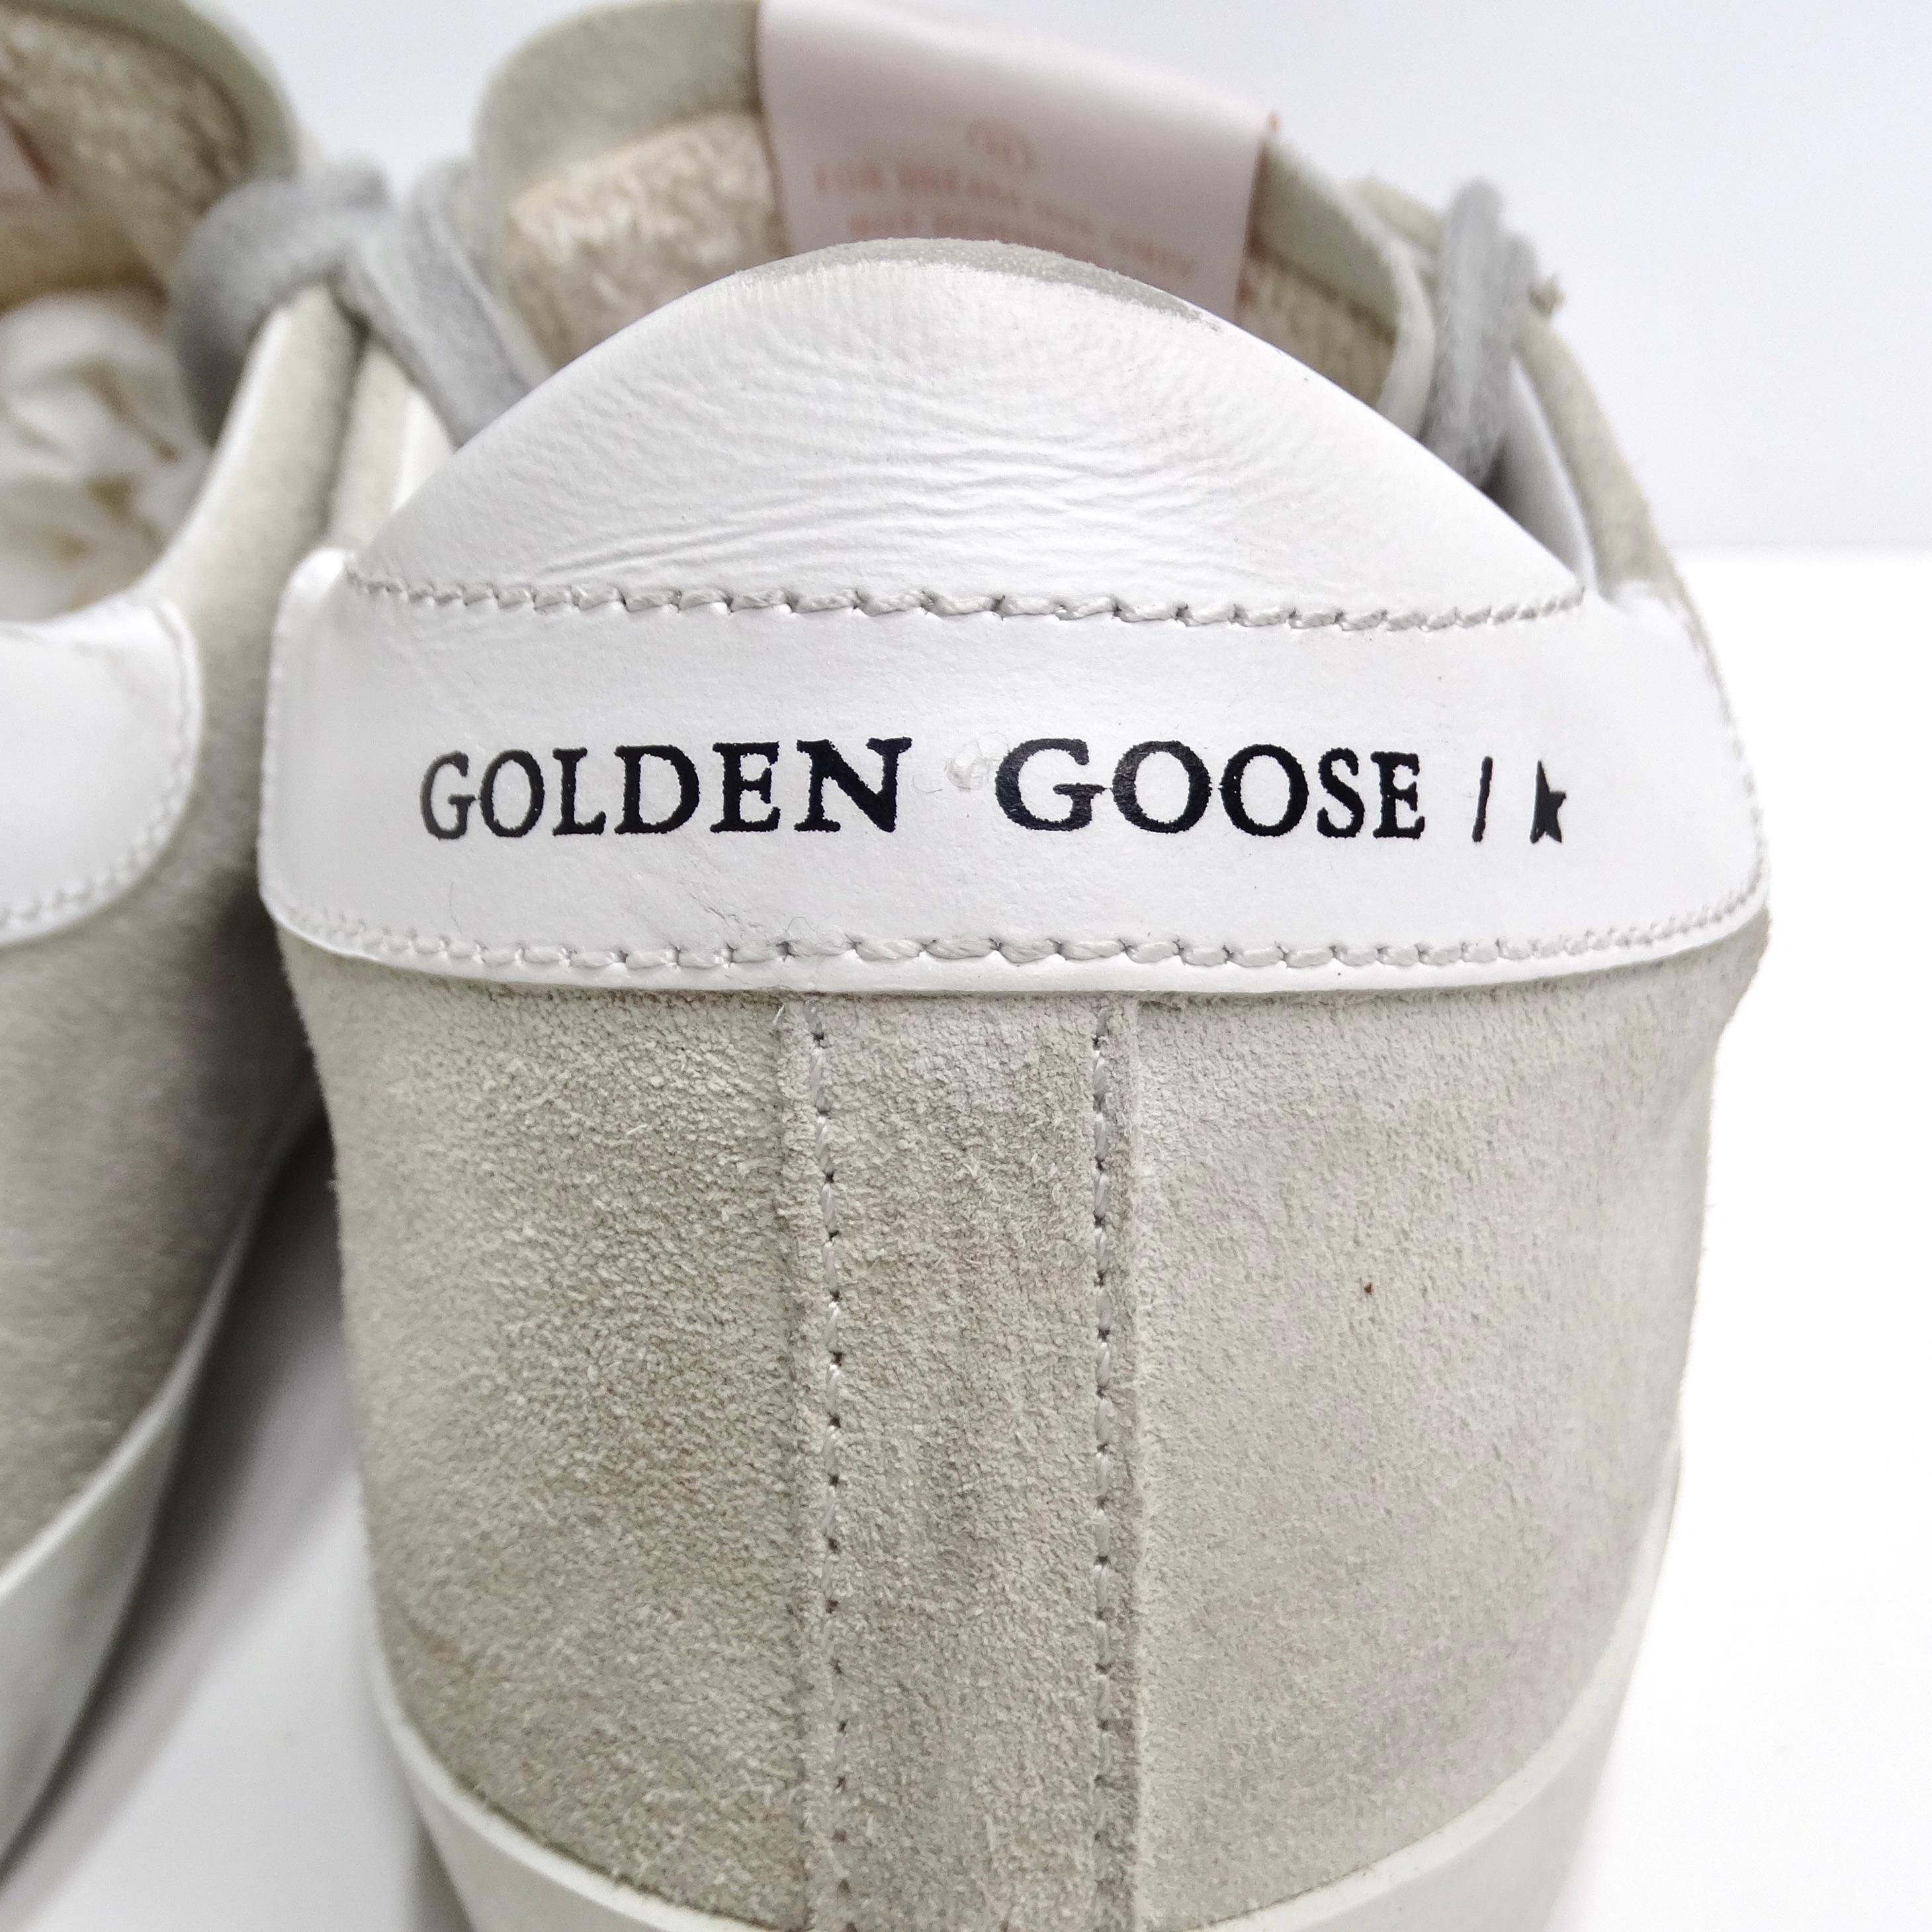  Golden Goose Superstar Swarovski Crystal Suede Sneakers 4